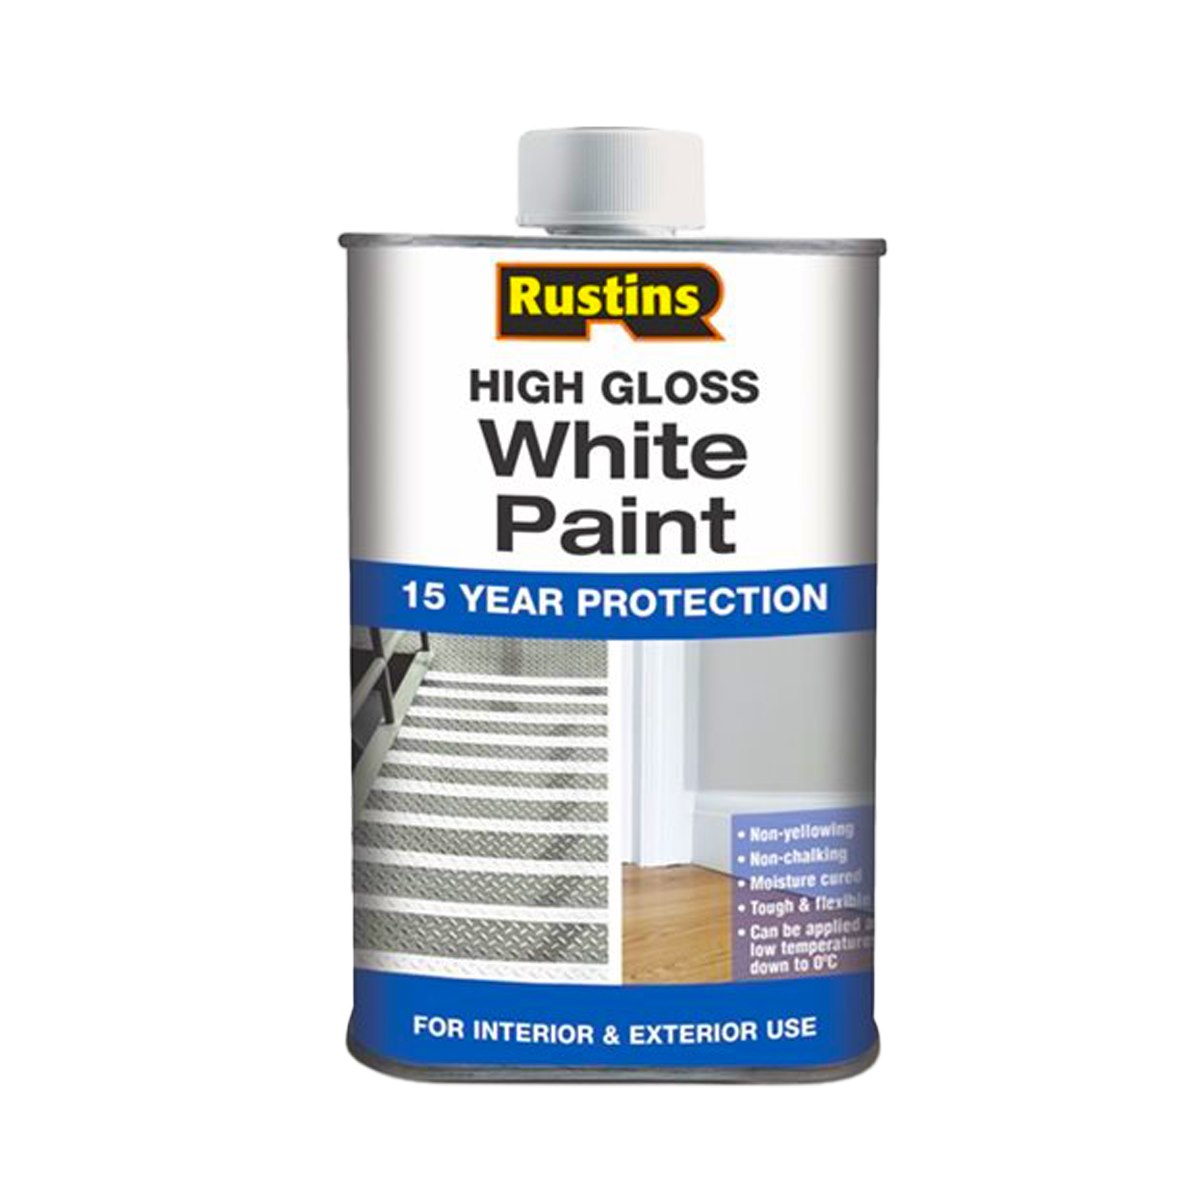 Rusrins High Gloss White Paint